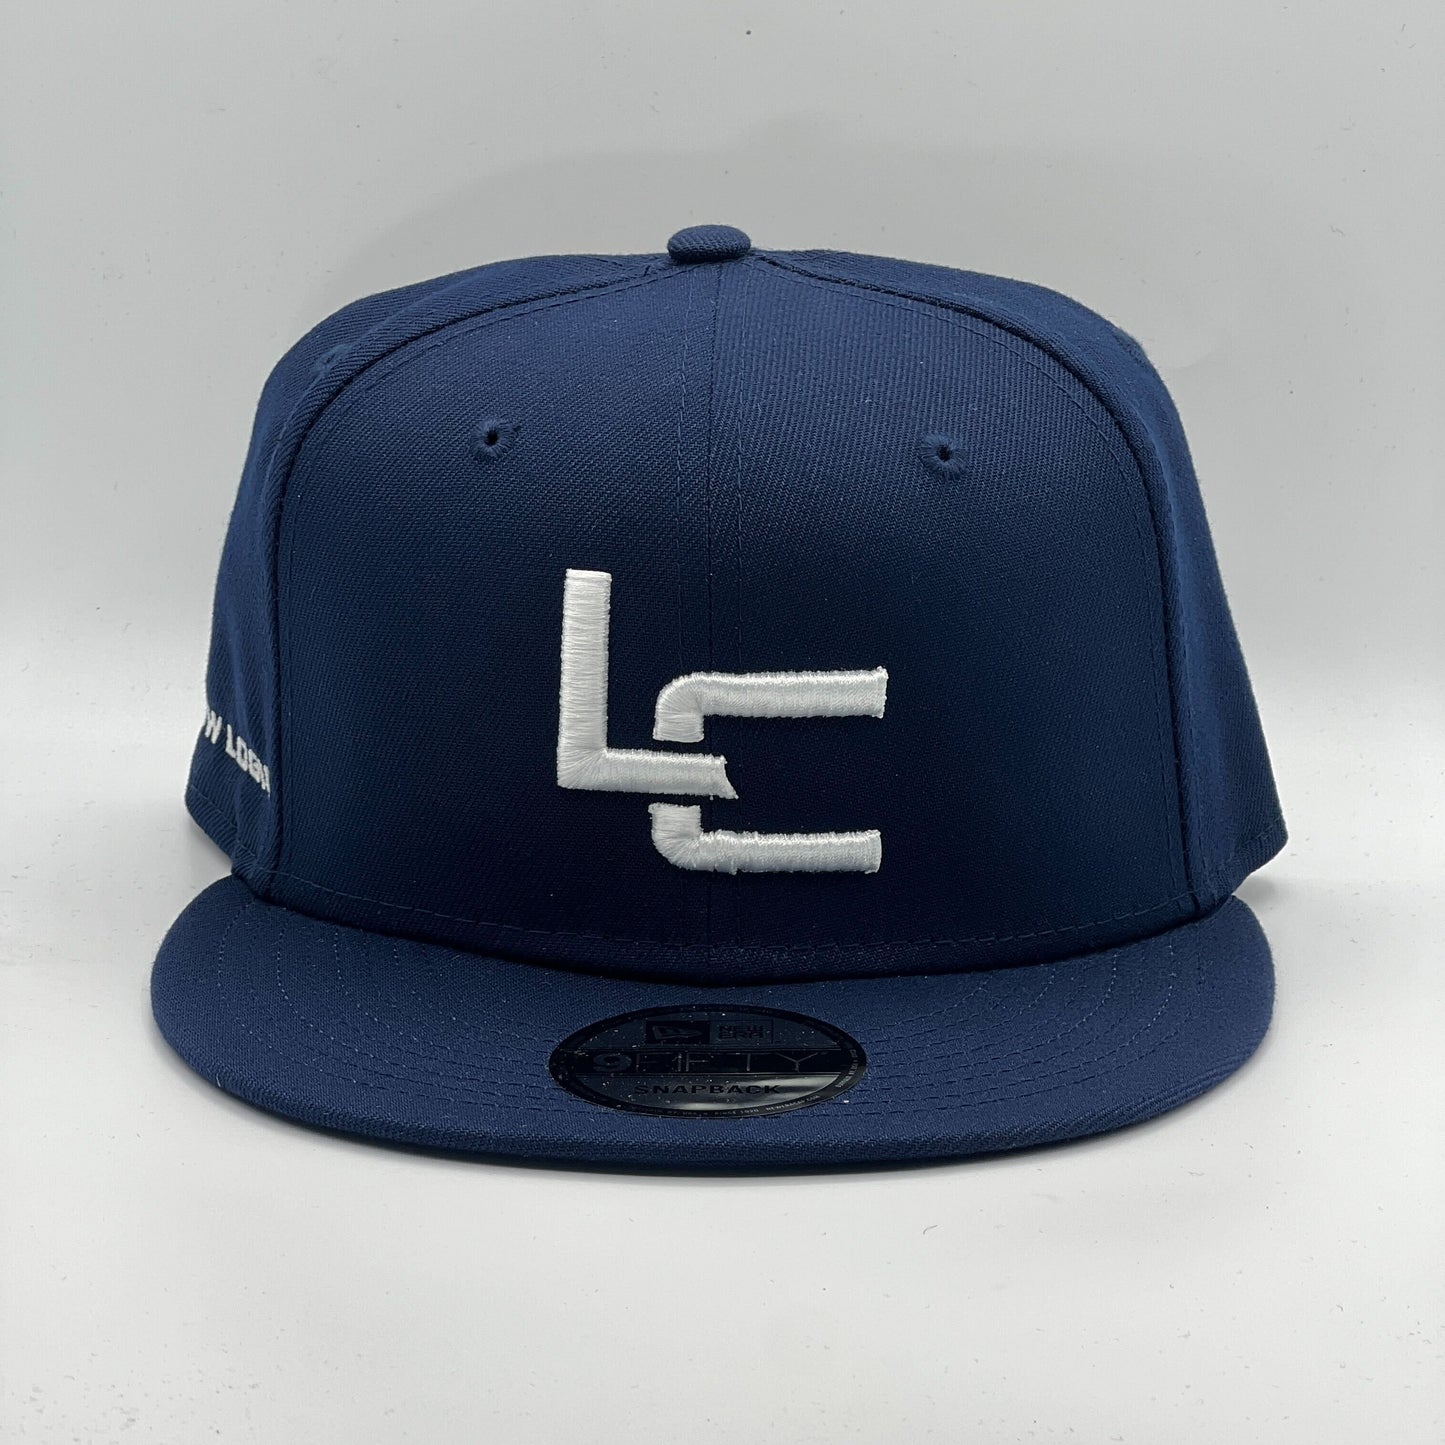 Logic LC Logo - New Era 9FIFTY Flat Bill Snapback - Shipping Included